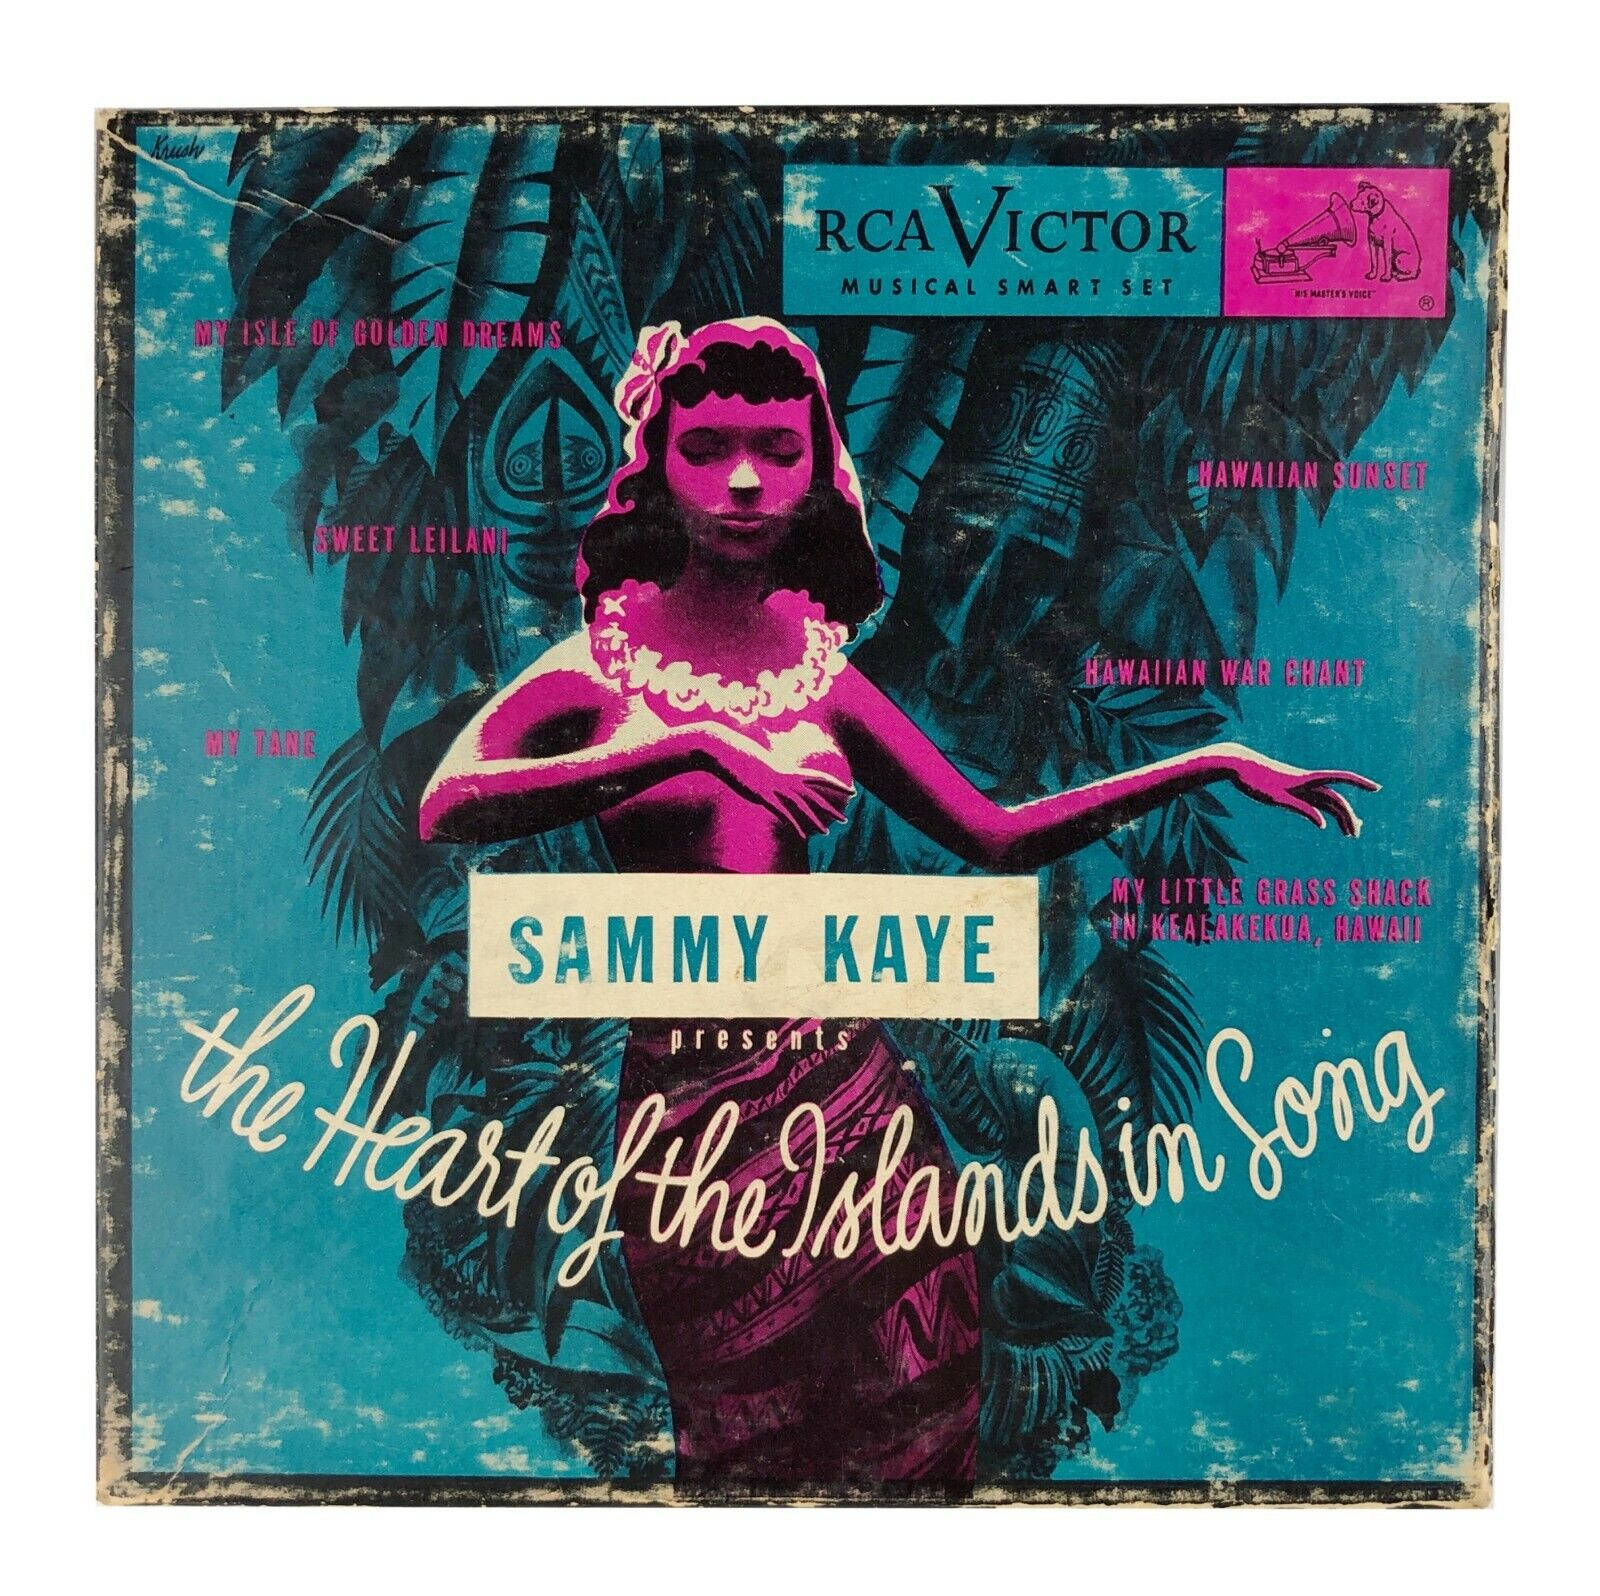 Sammy Kaye The Sammy Kaye Collection 3CD